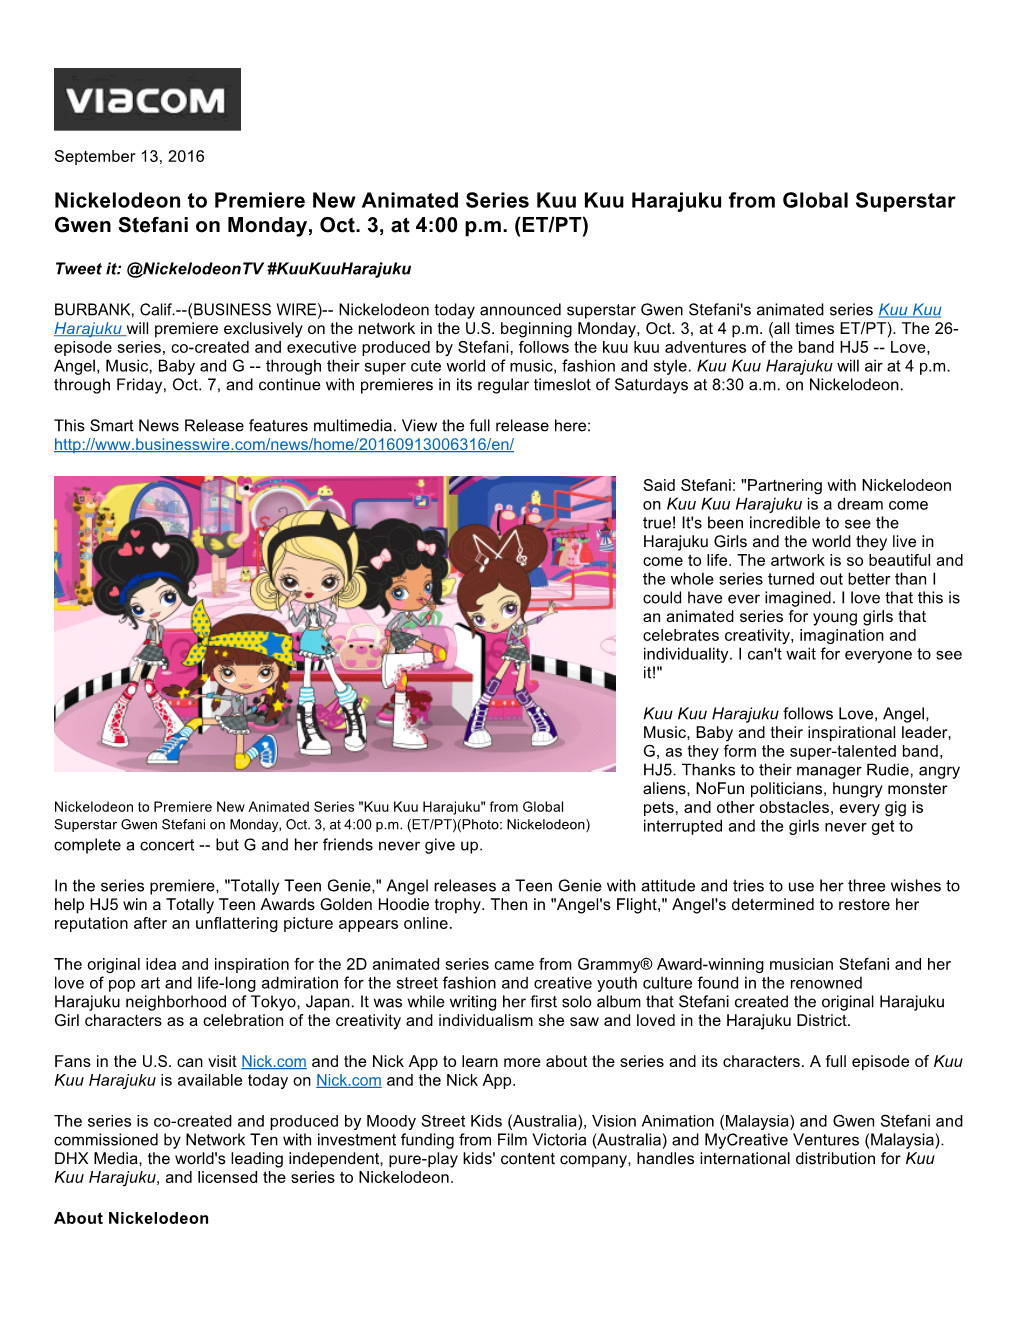 Nickelodeon to Premiere New Animated Series Kuu Kuu Harajuku from Global Superstar Gwen Stefani on Monday, Oct